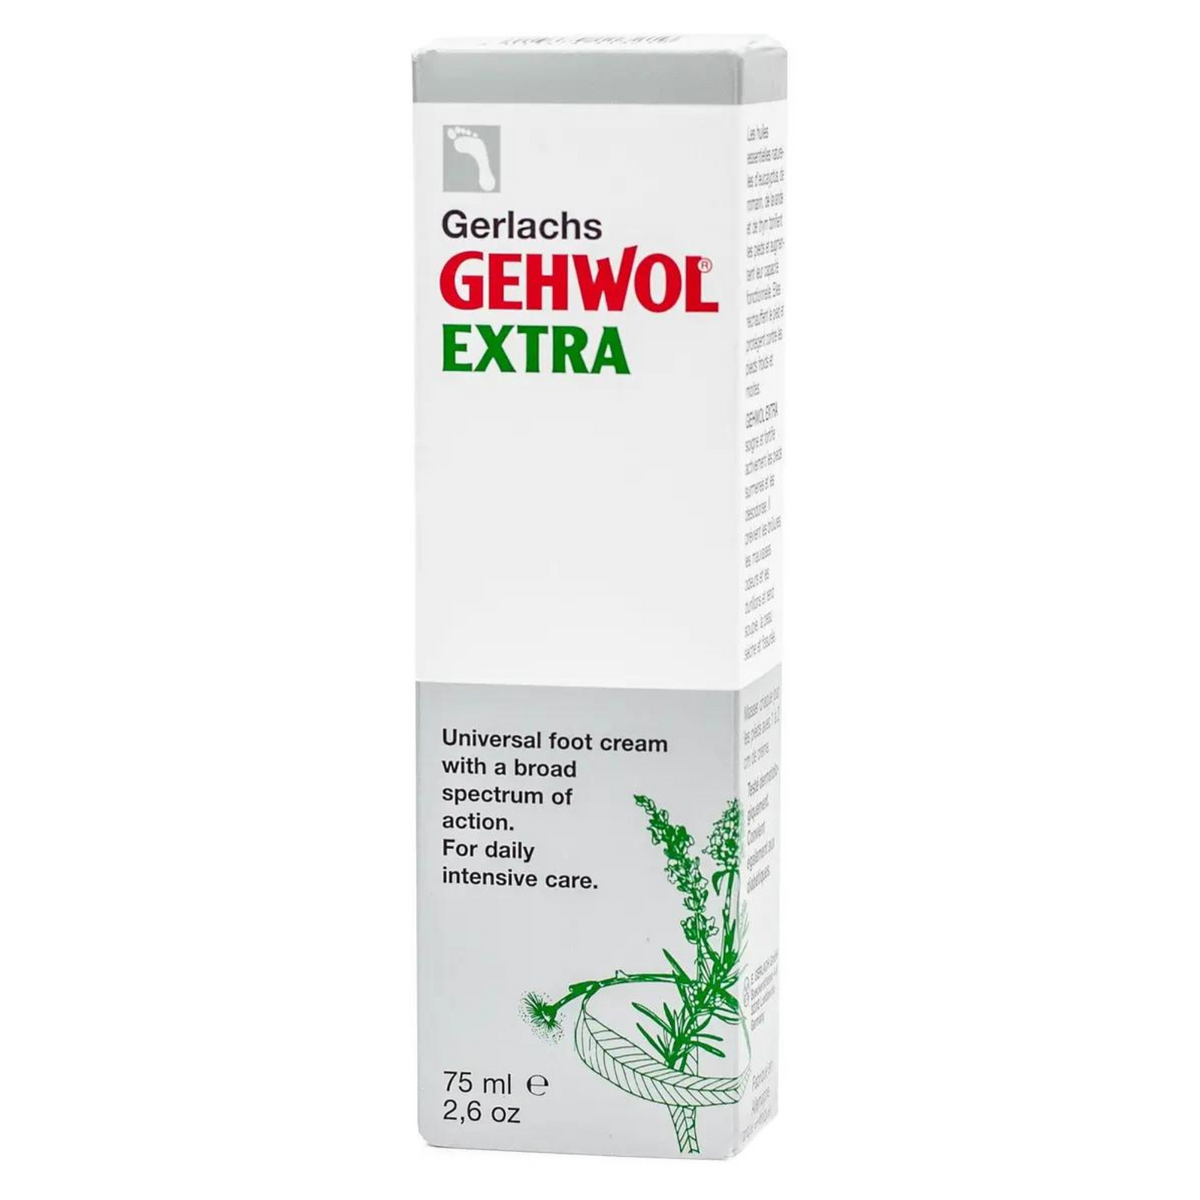 Primary Image of Gehwol Extra Foot Cream (75 ml)